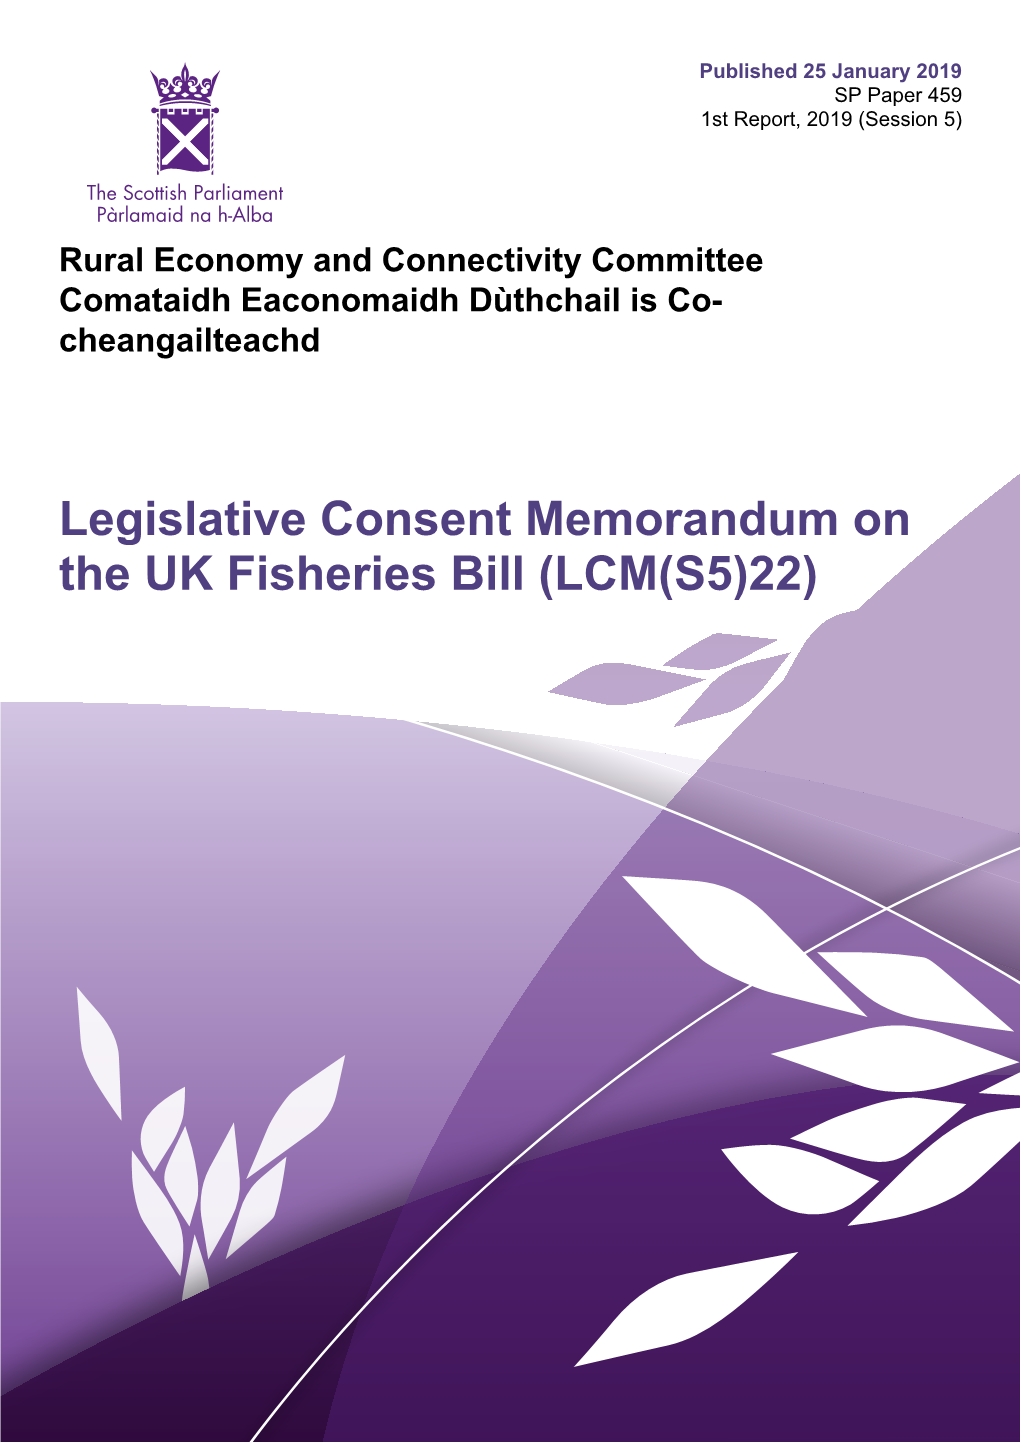 Legislative Consent Memorandum on the UK Fisheries Bill (LCM(S5)22) Published in Scotland by the Scottish Parliamentary Corporate Body